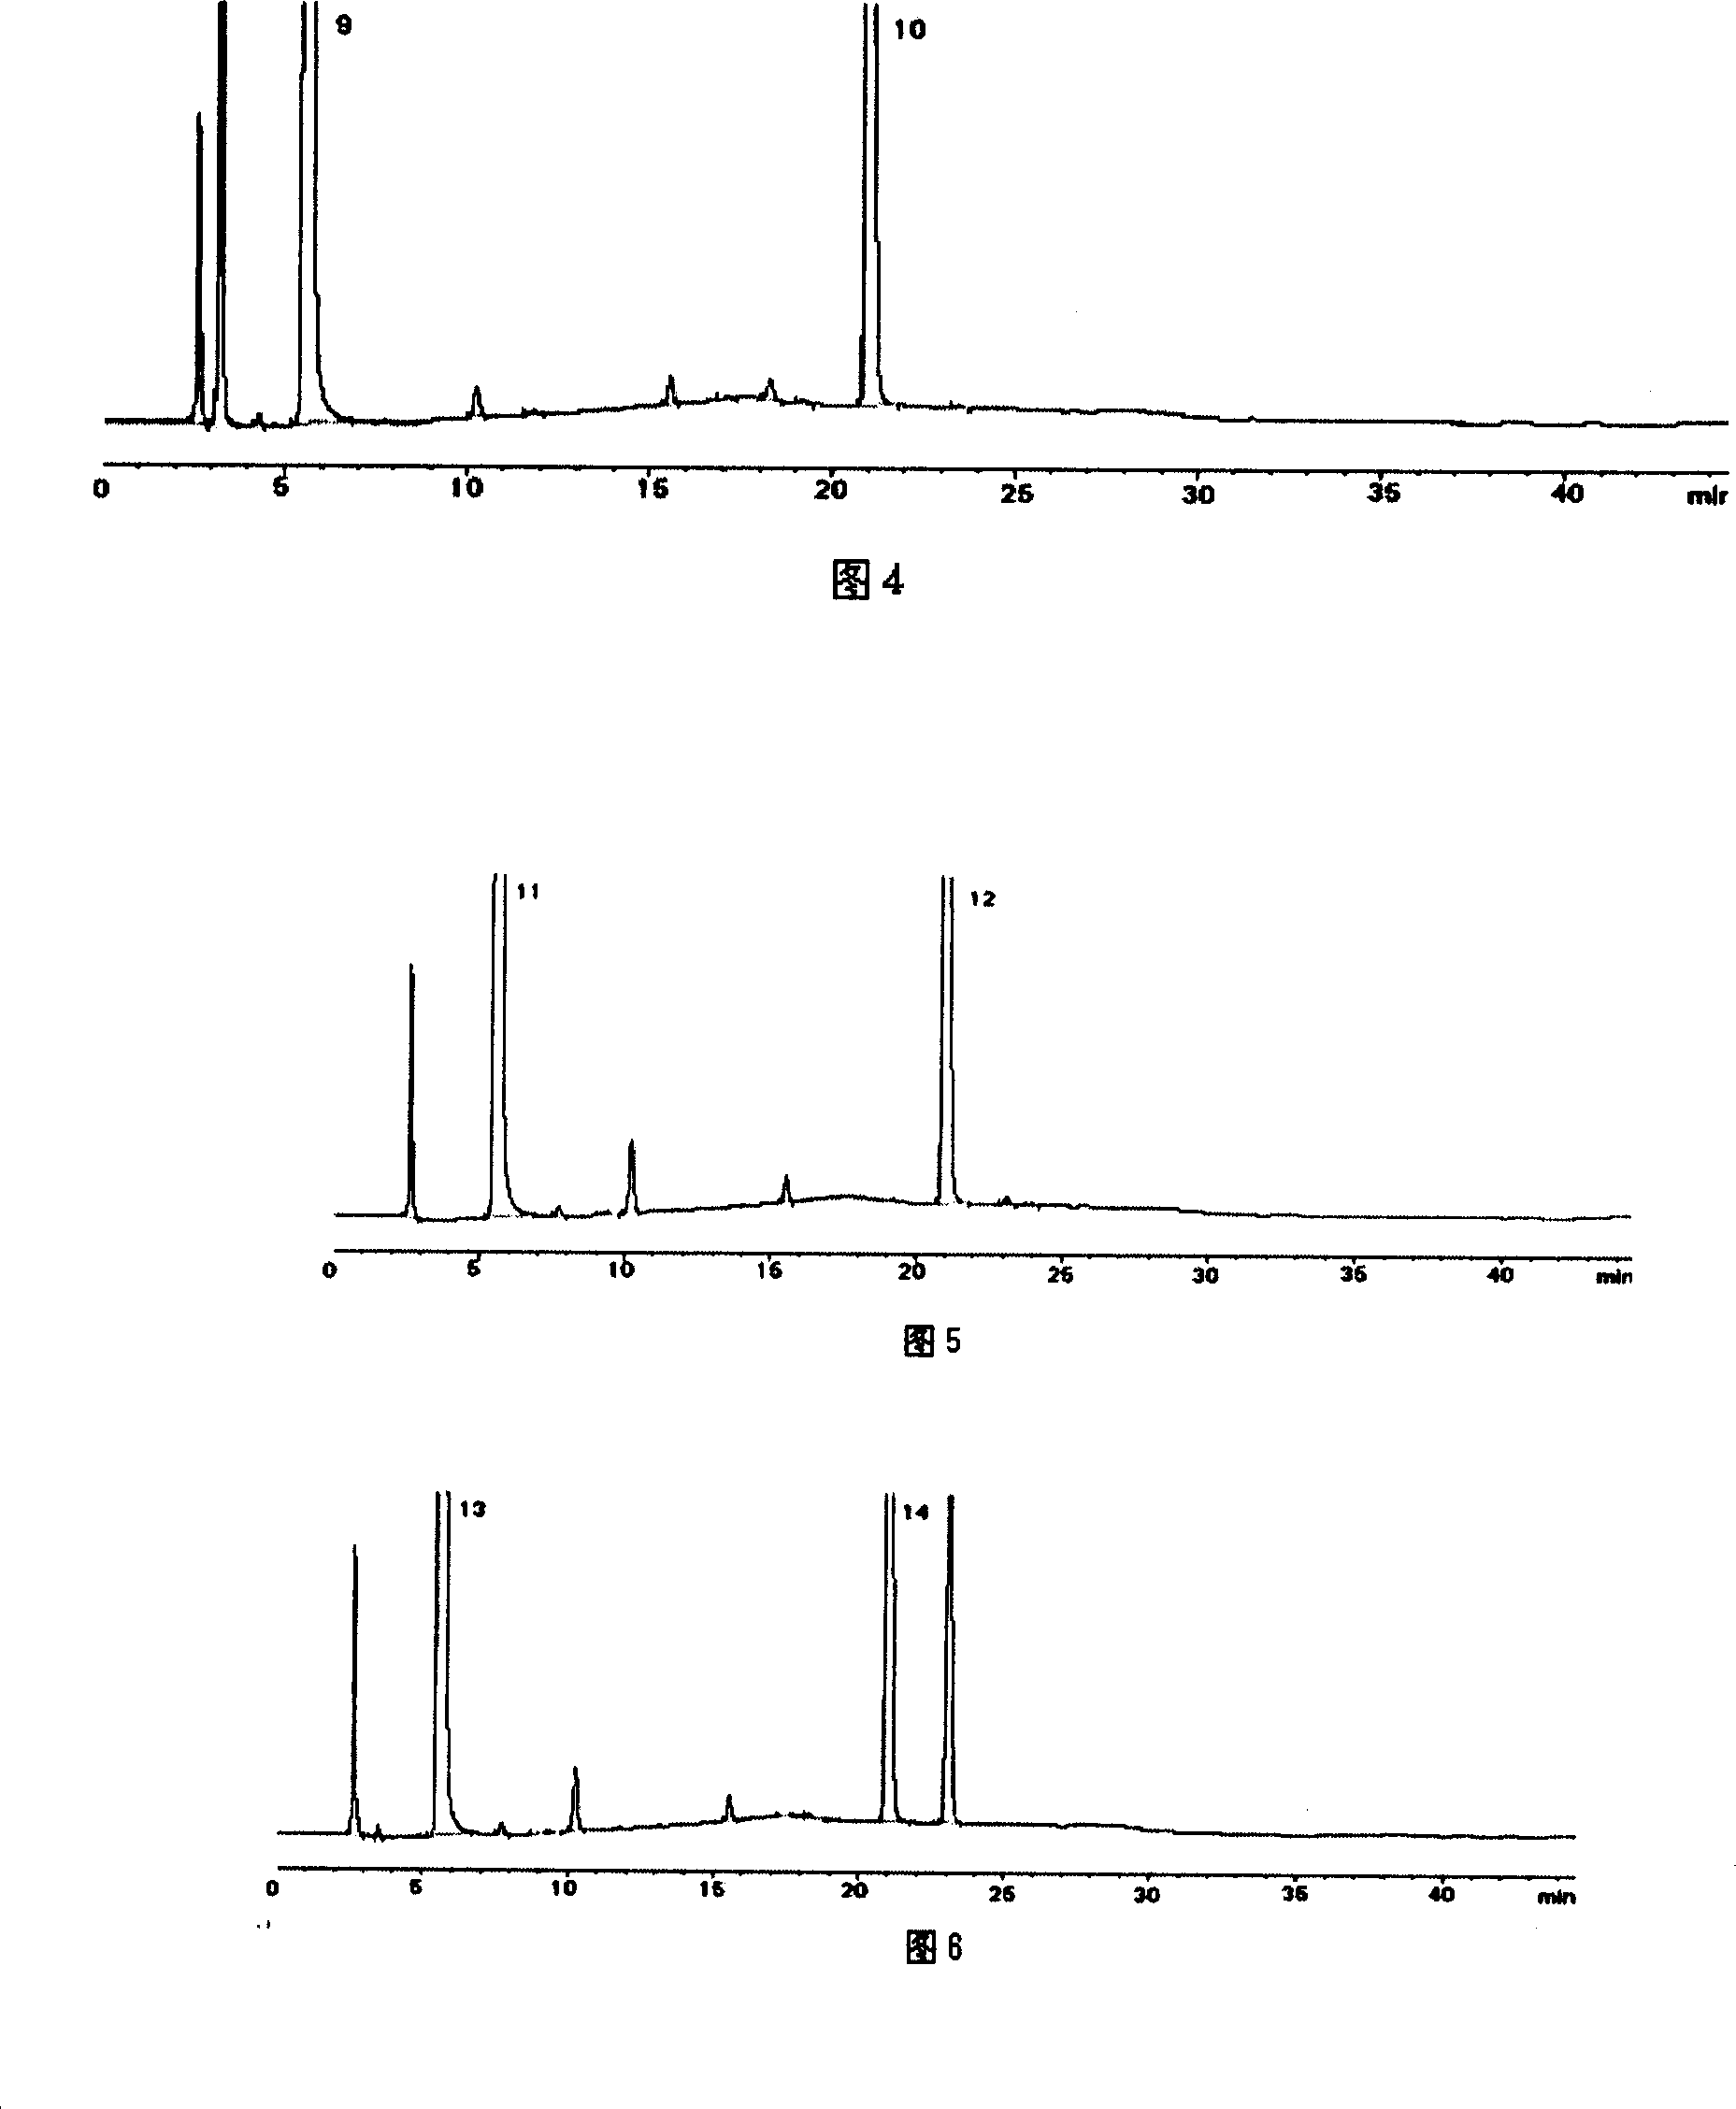 Method for determining impurities for paracetamol and tramadol hydrochloride preparation